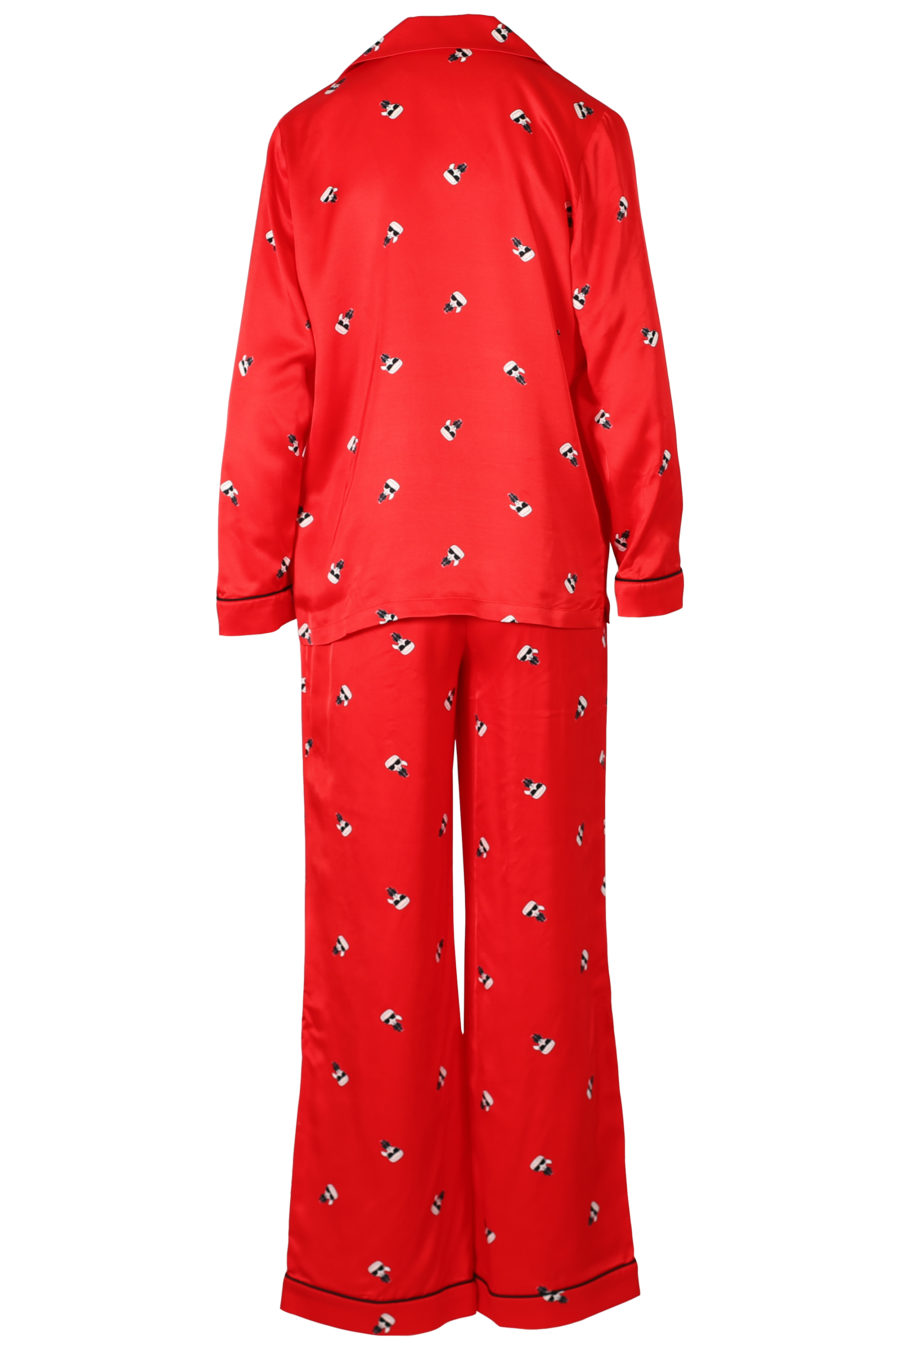 Set de regalo pijama de satén color rojo - IMG 3291